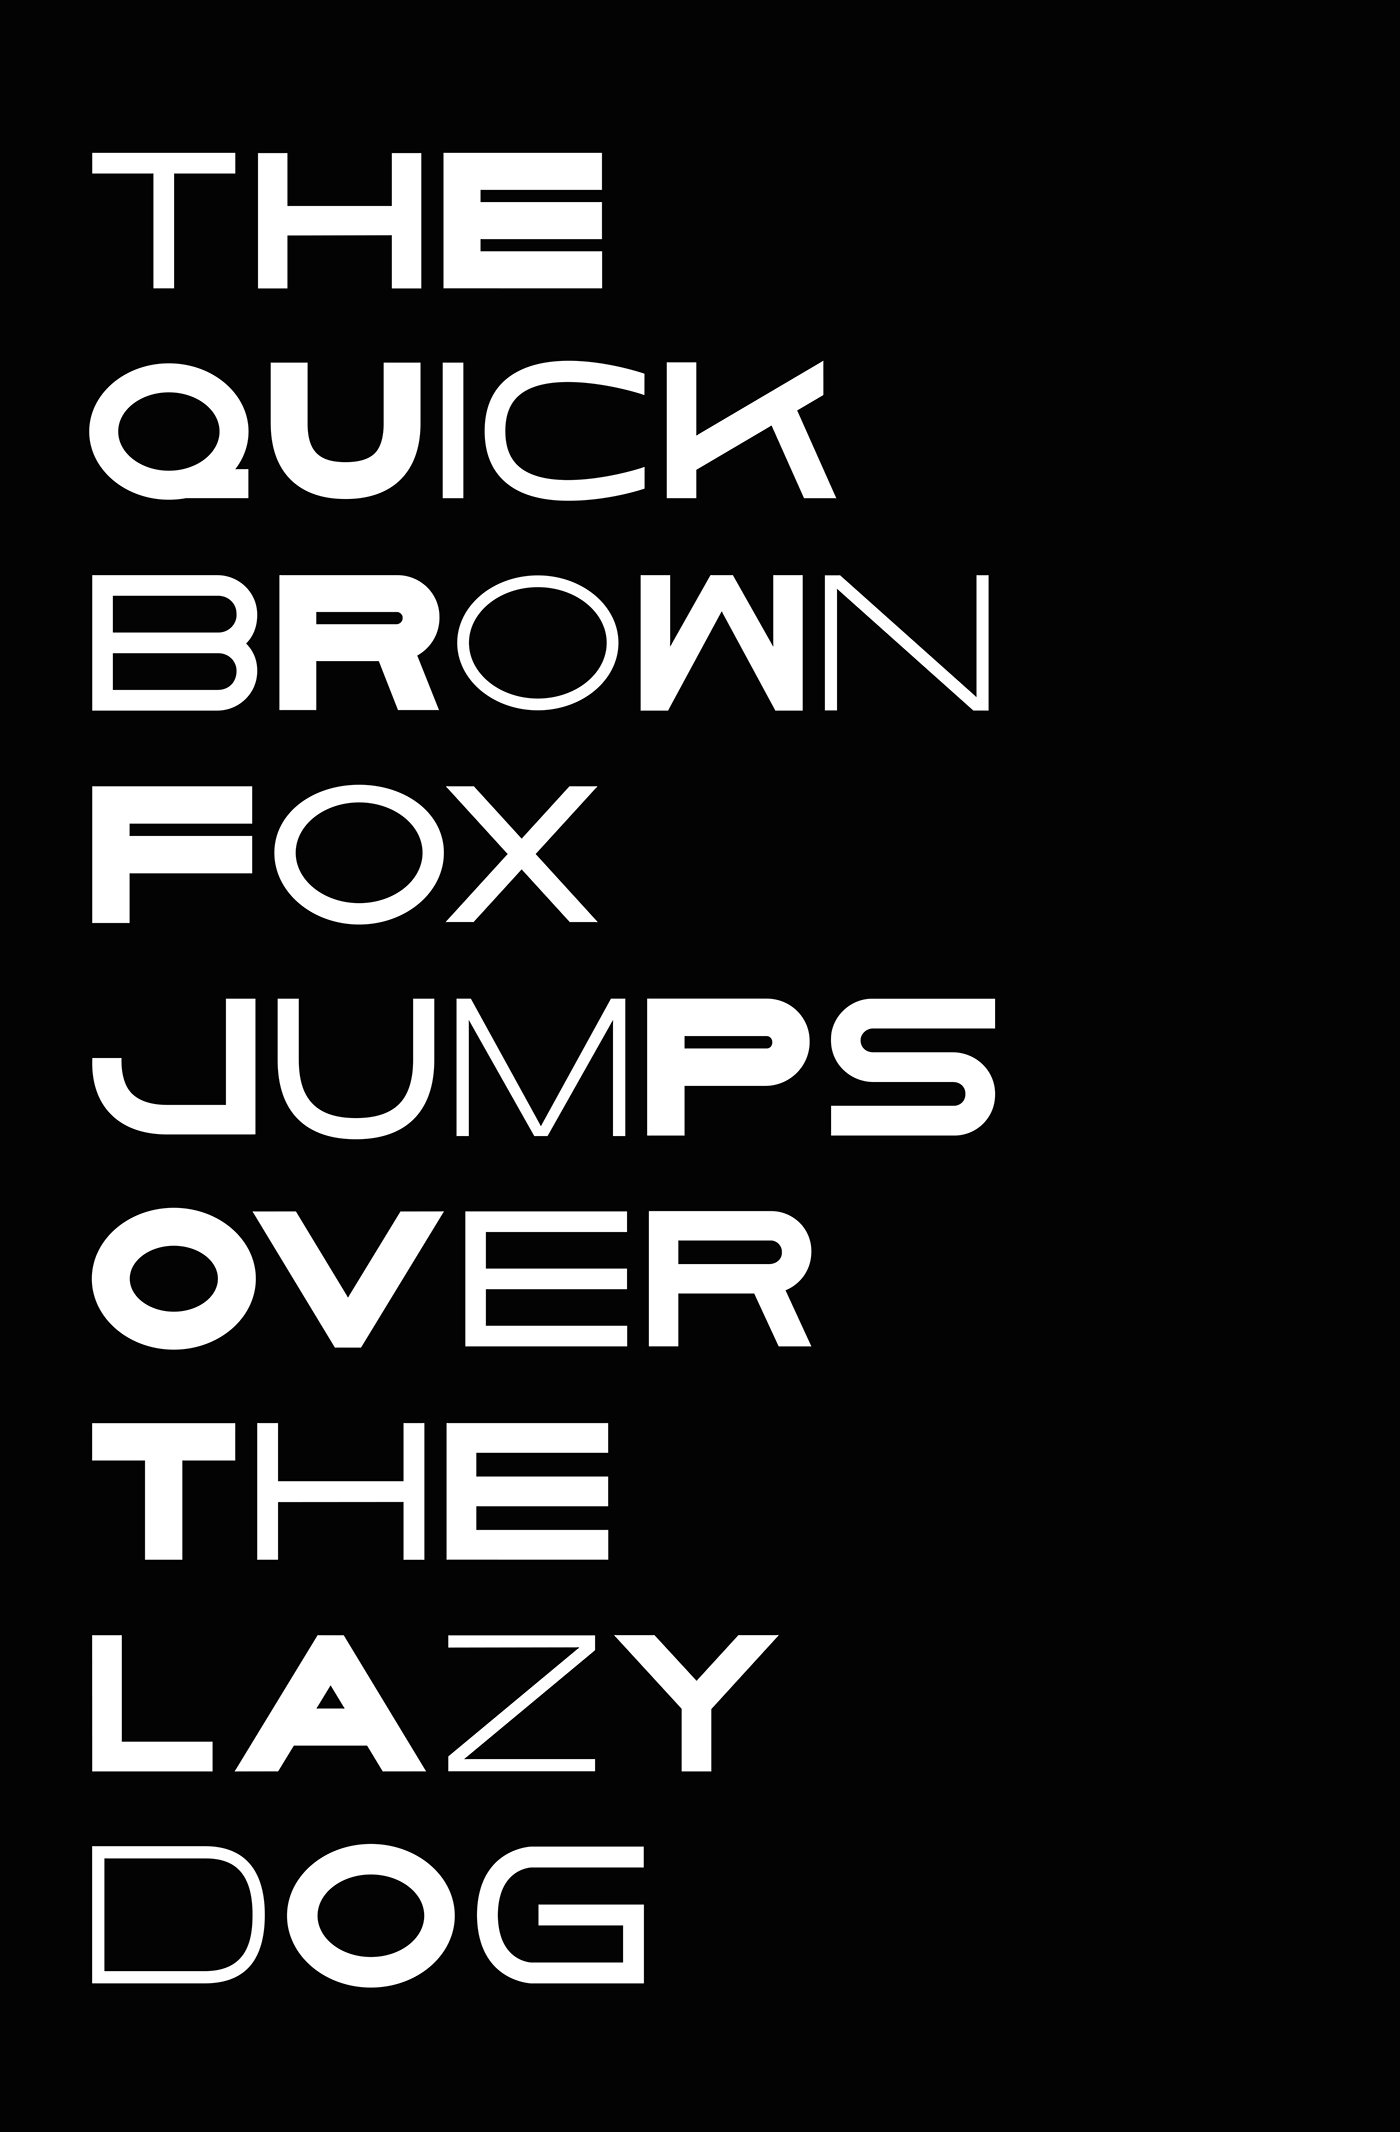 black bold font thin type Typeface Menes grotesk sans serif